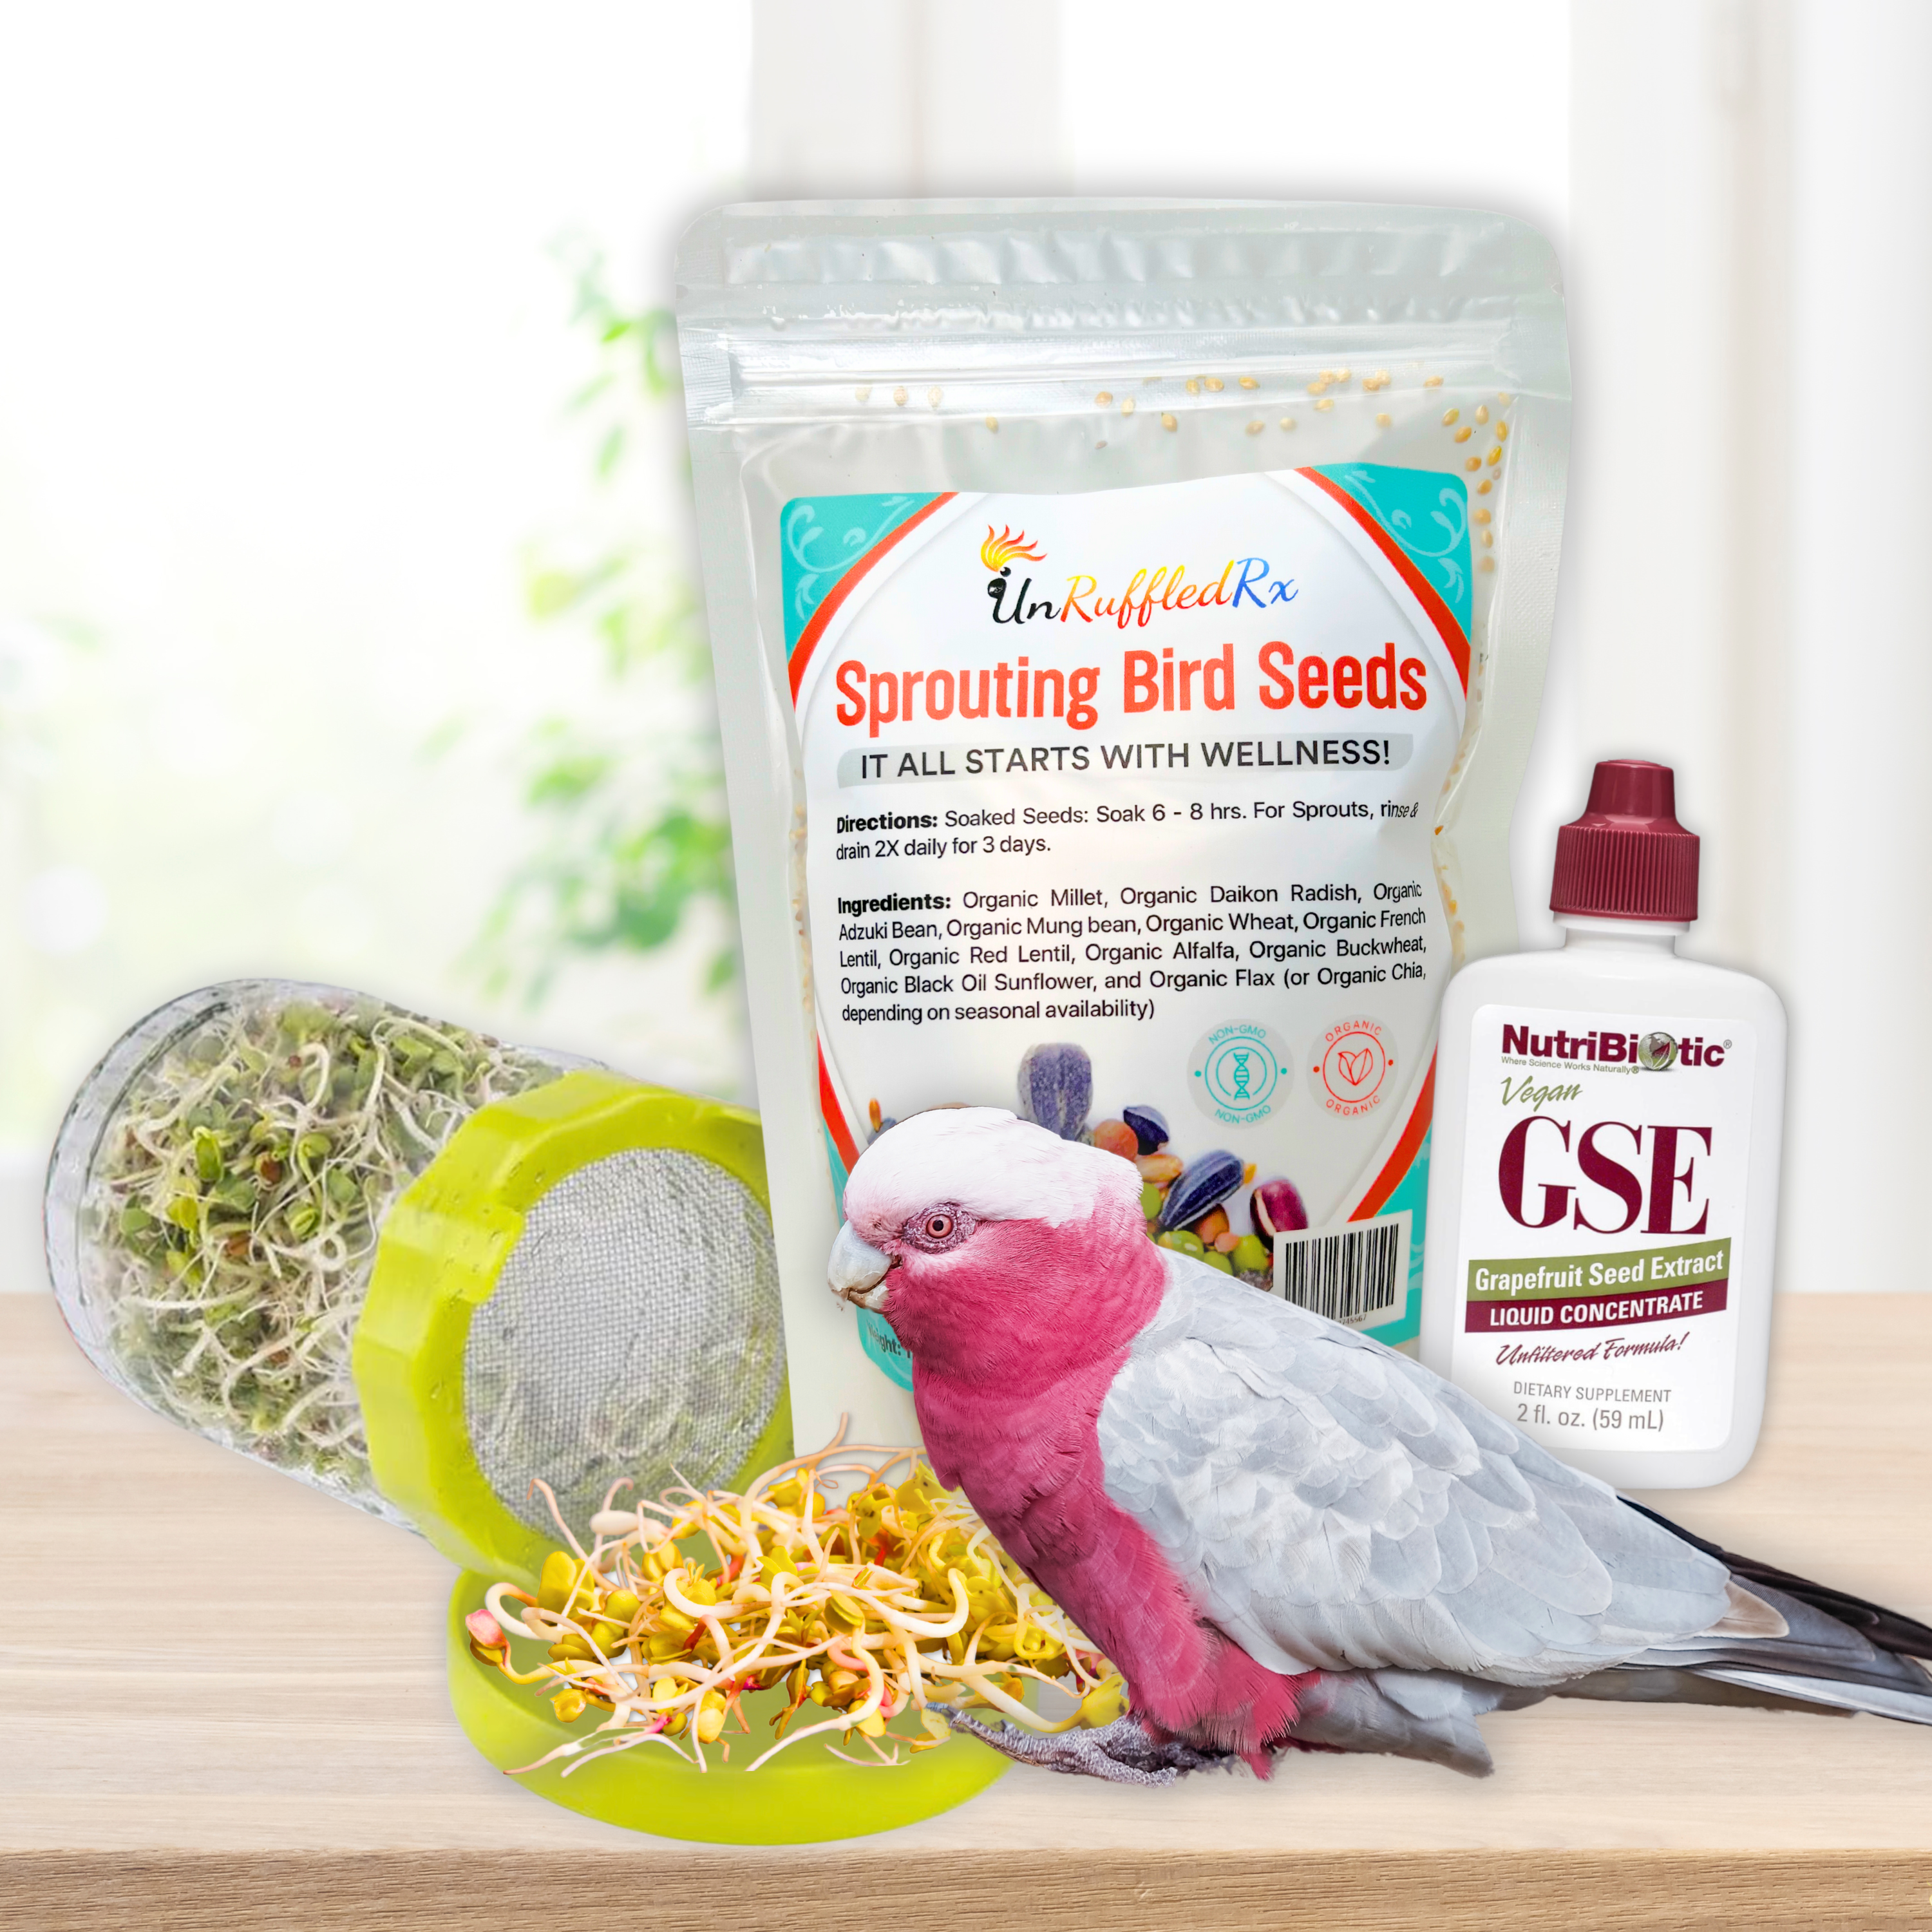 Bird Supplies Test Product 5$